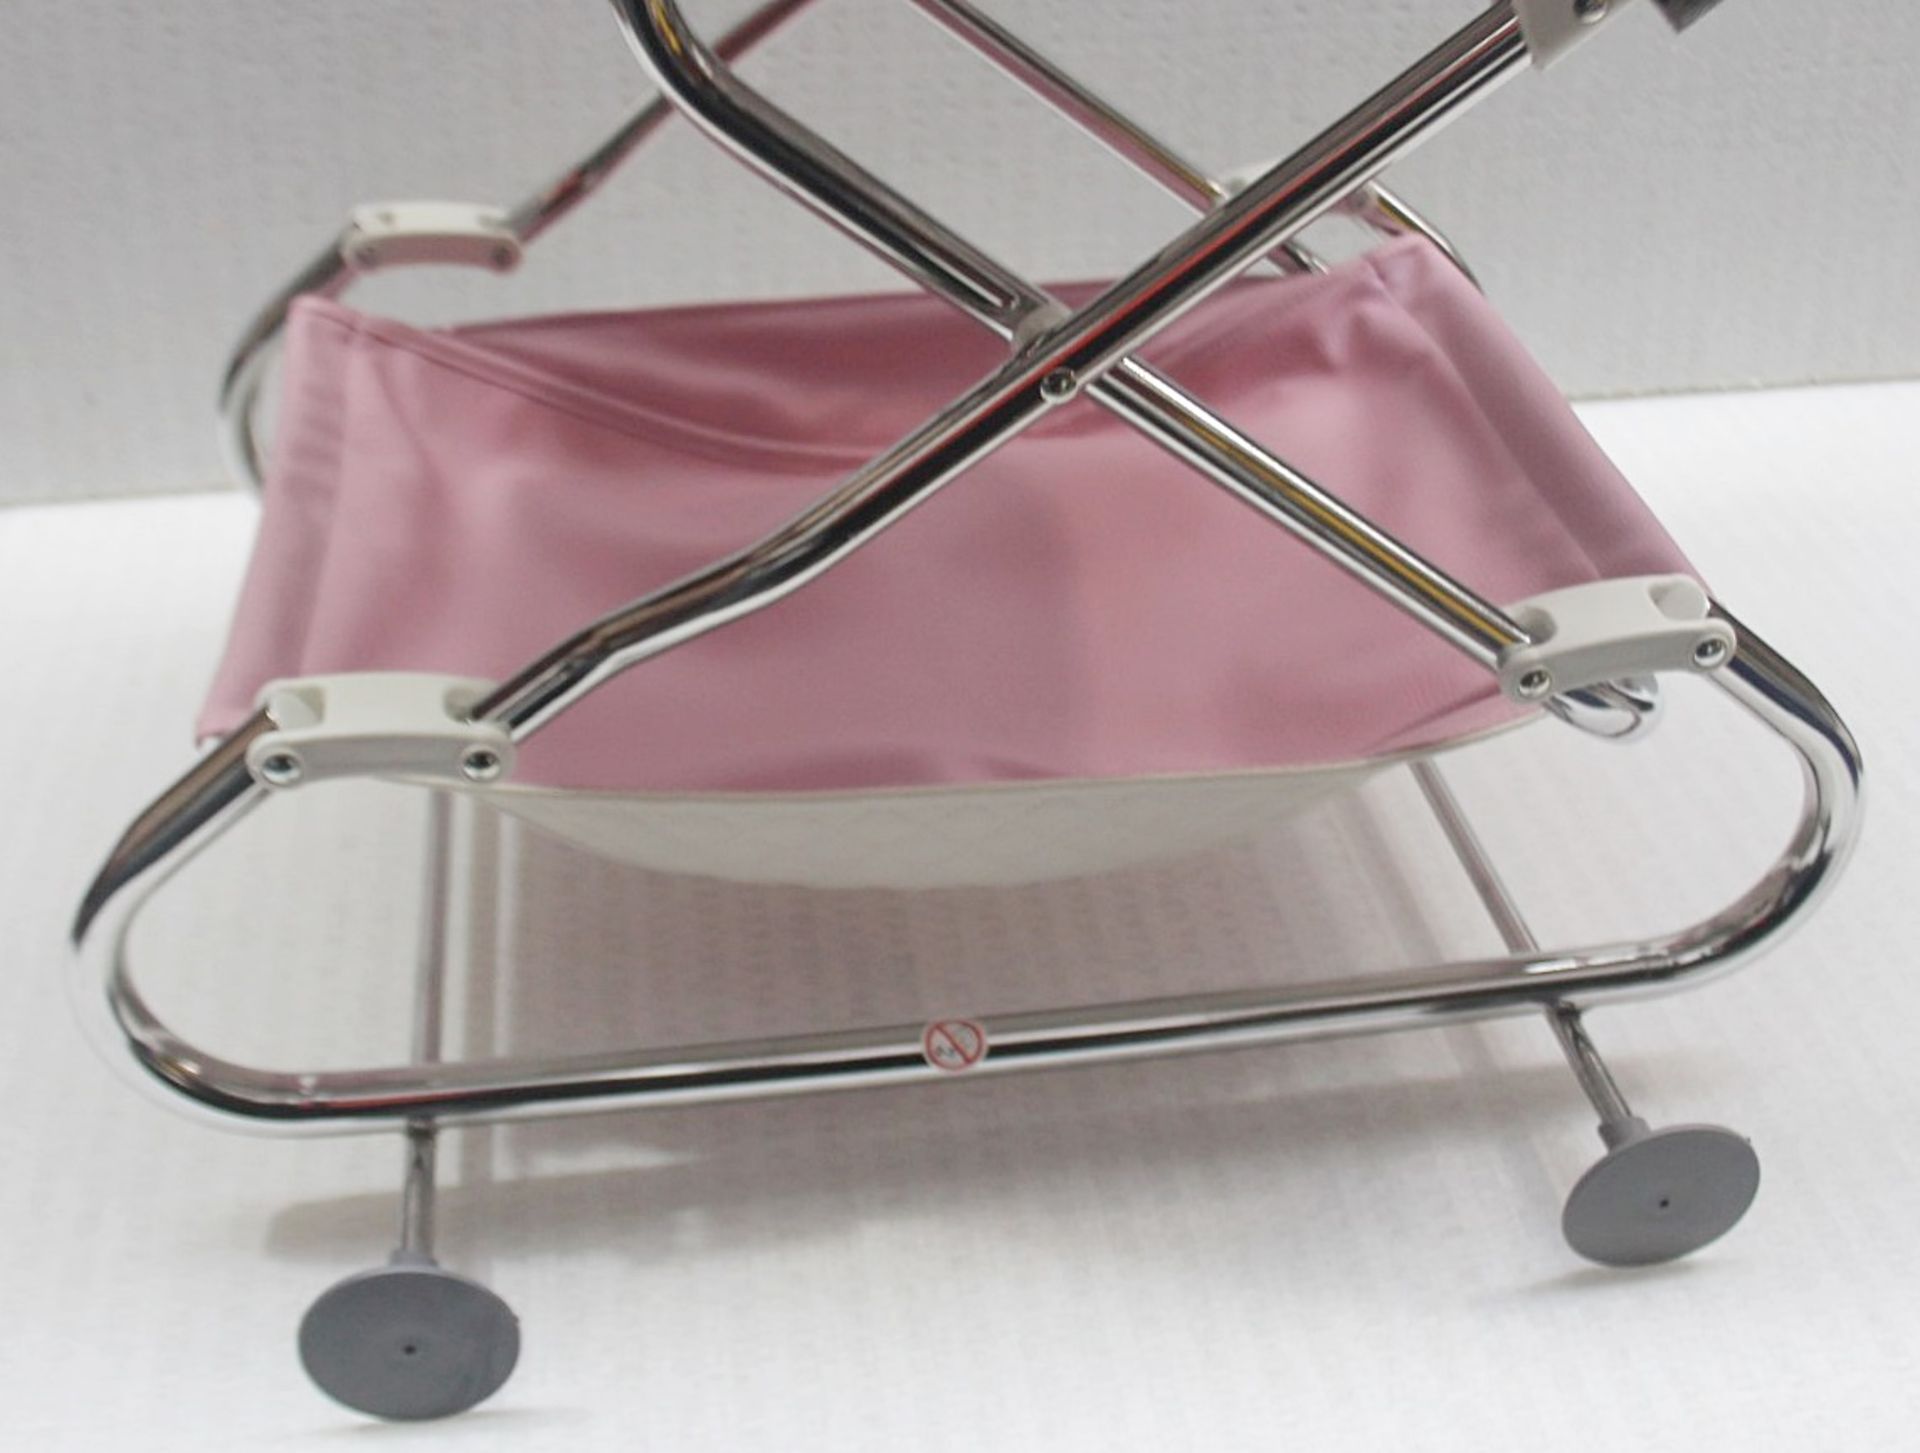 1 x BEBECAR 'Stylo' Premium Dolls Pram + Bag In Candy Pink - Original Price £325.00 - Image 7 of 13